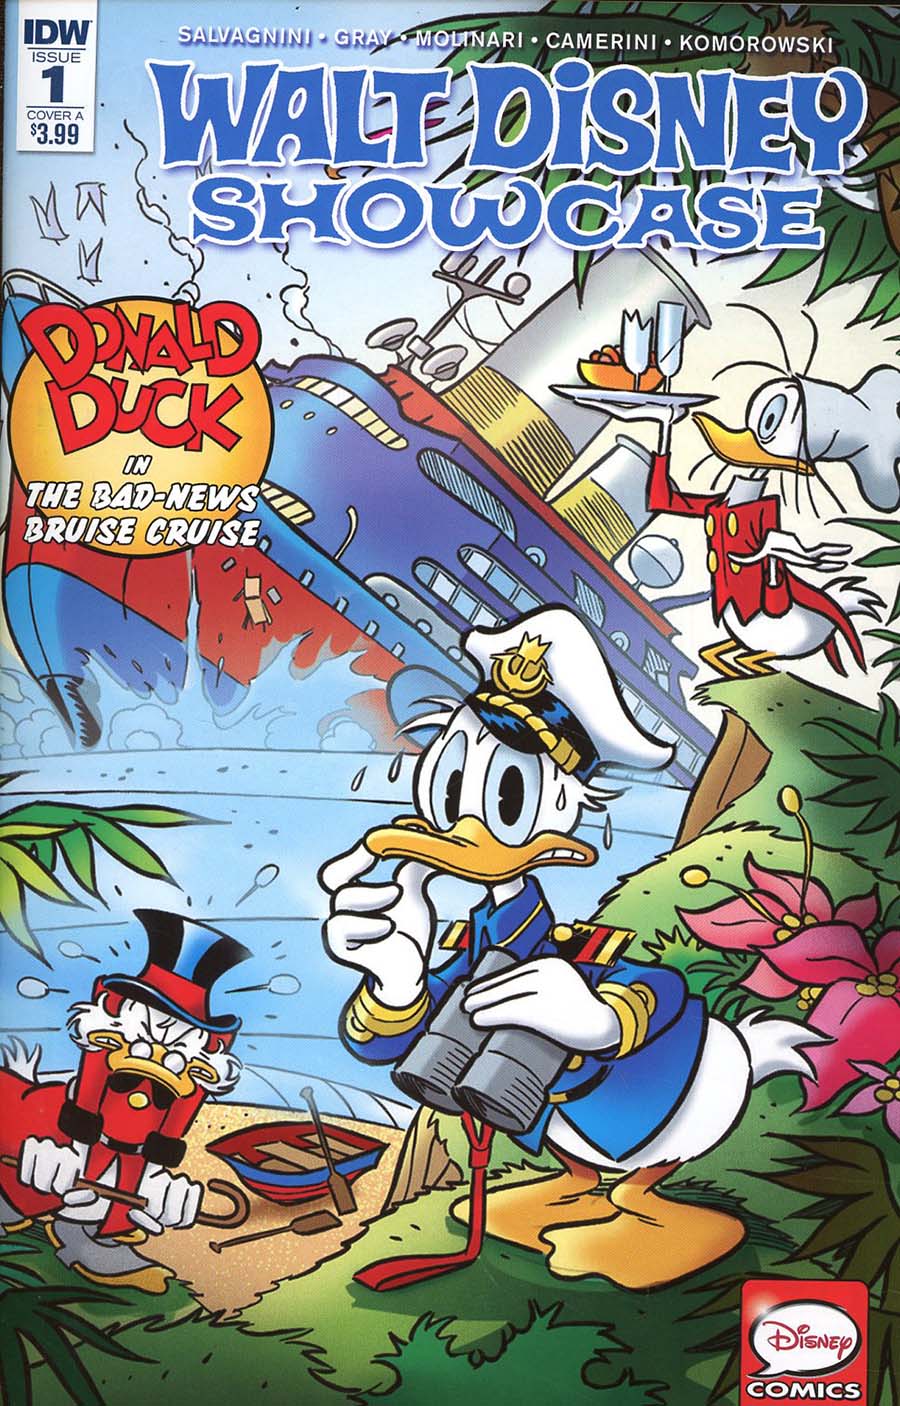 Walt Disney Showcase Vol 2 #1 Donald Duck Cover A Regular Andrea Freccero Cover